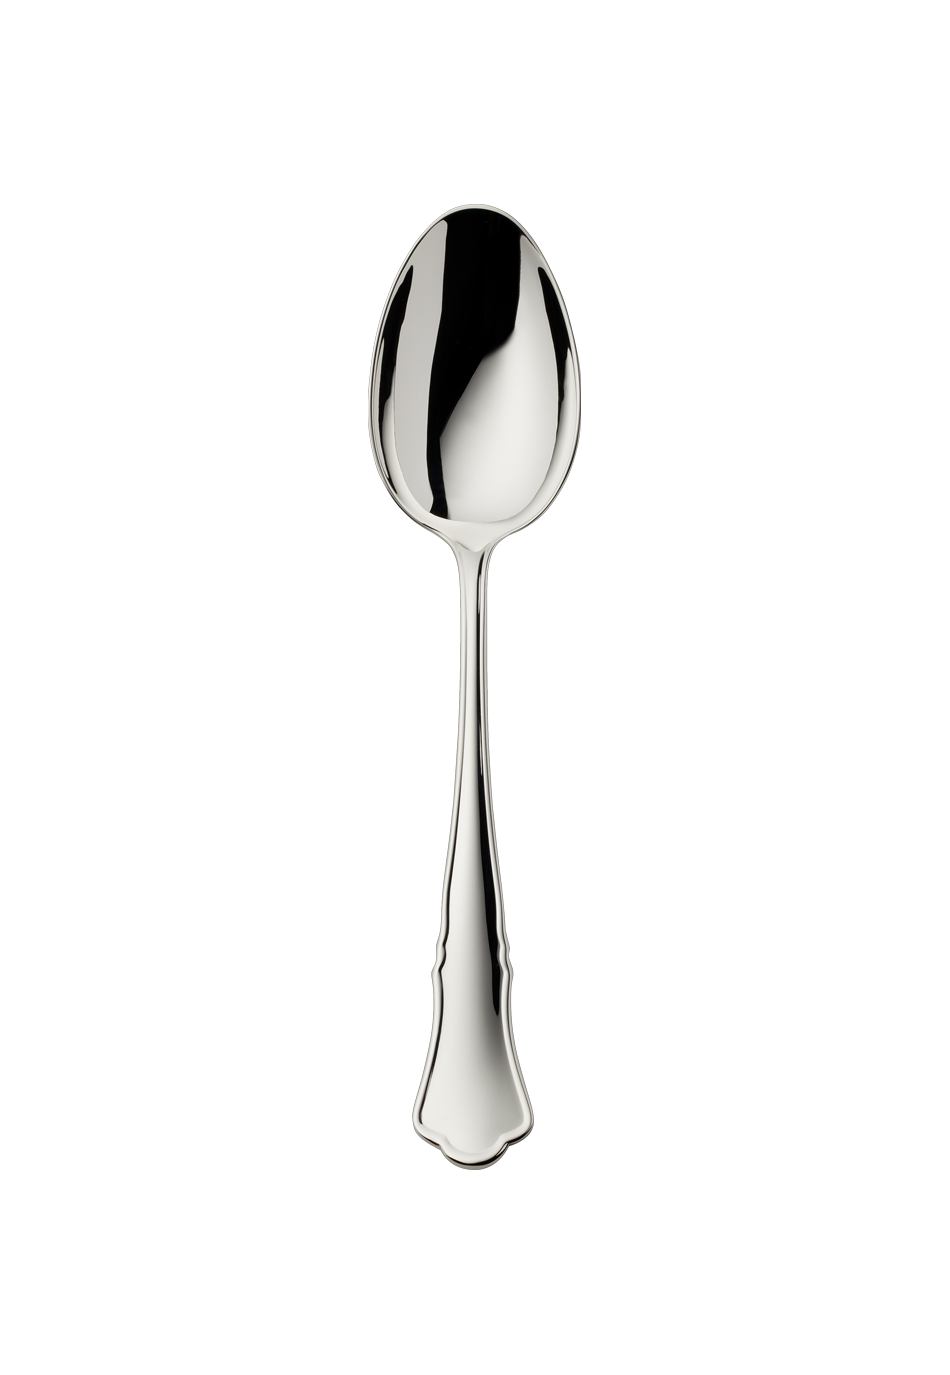 Alt-Chippendale Menu Spoon (150g massive silverplated)